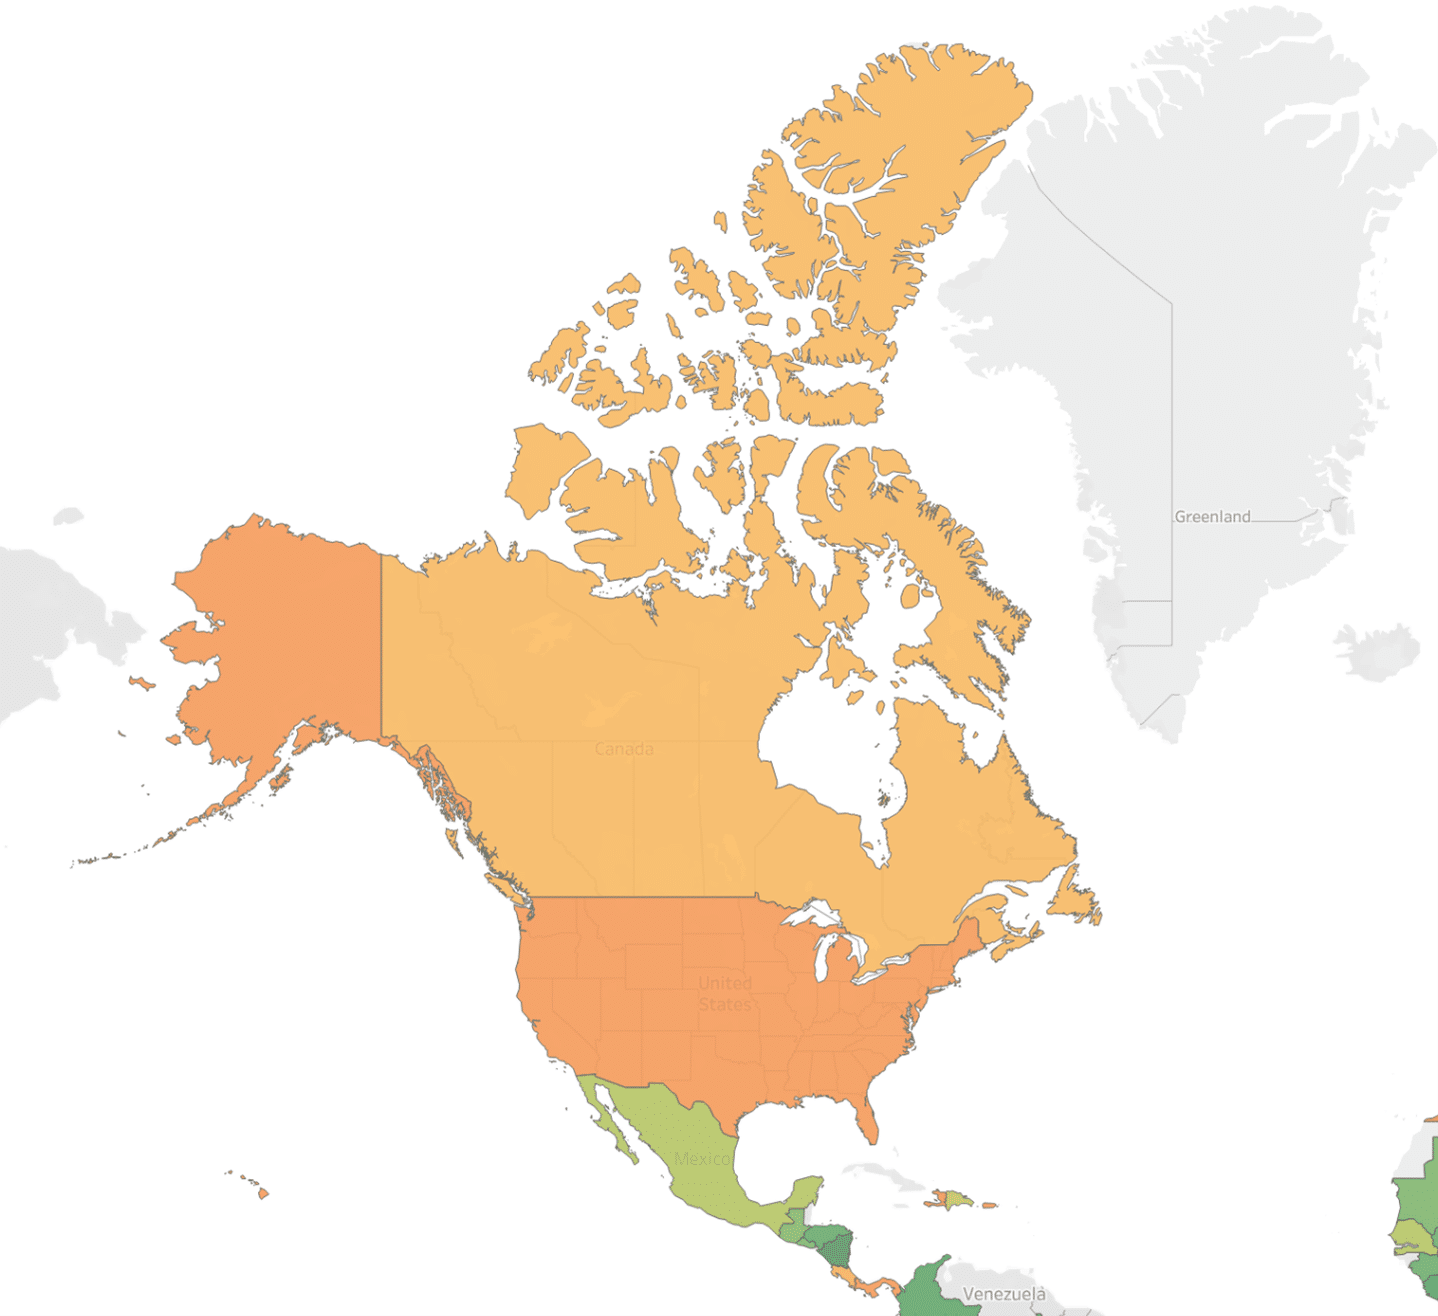 North America engagement heatmap